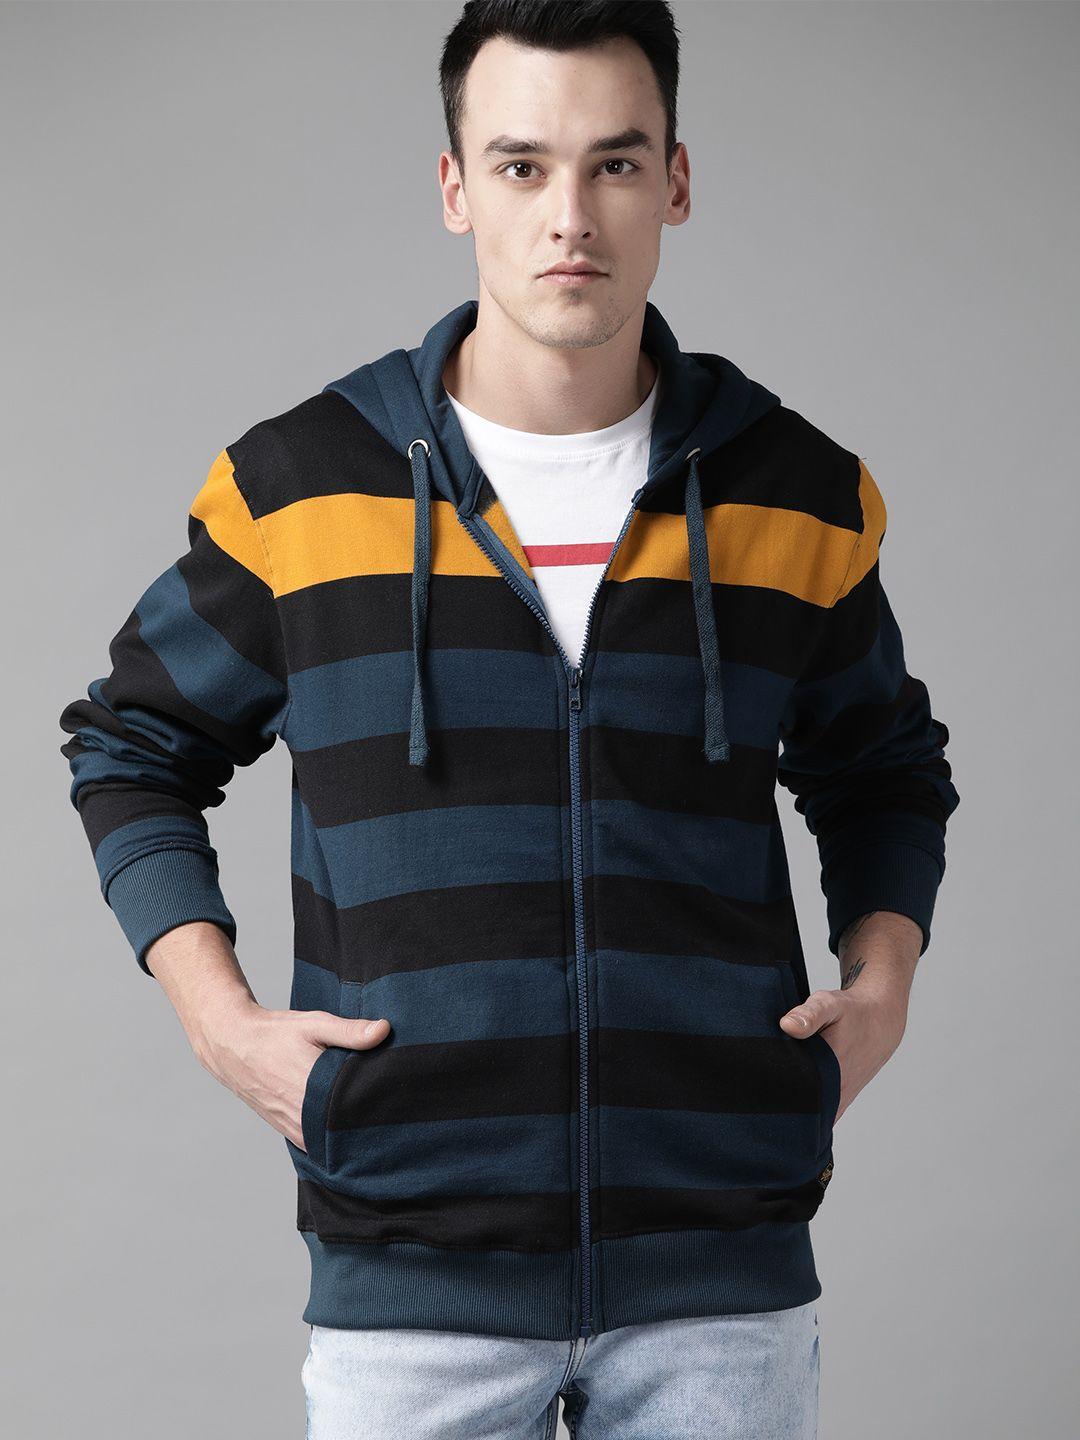 the roadster lifestyle co men teal blue & black striped hooded sweatshirt